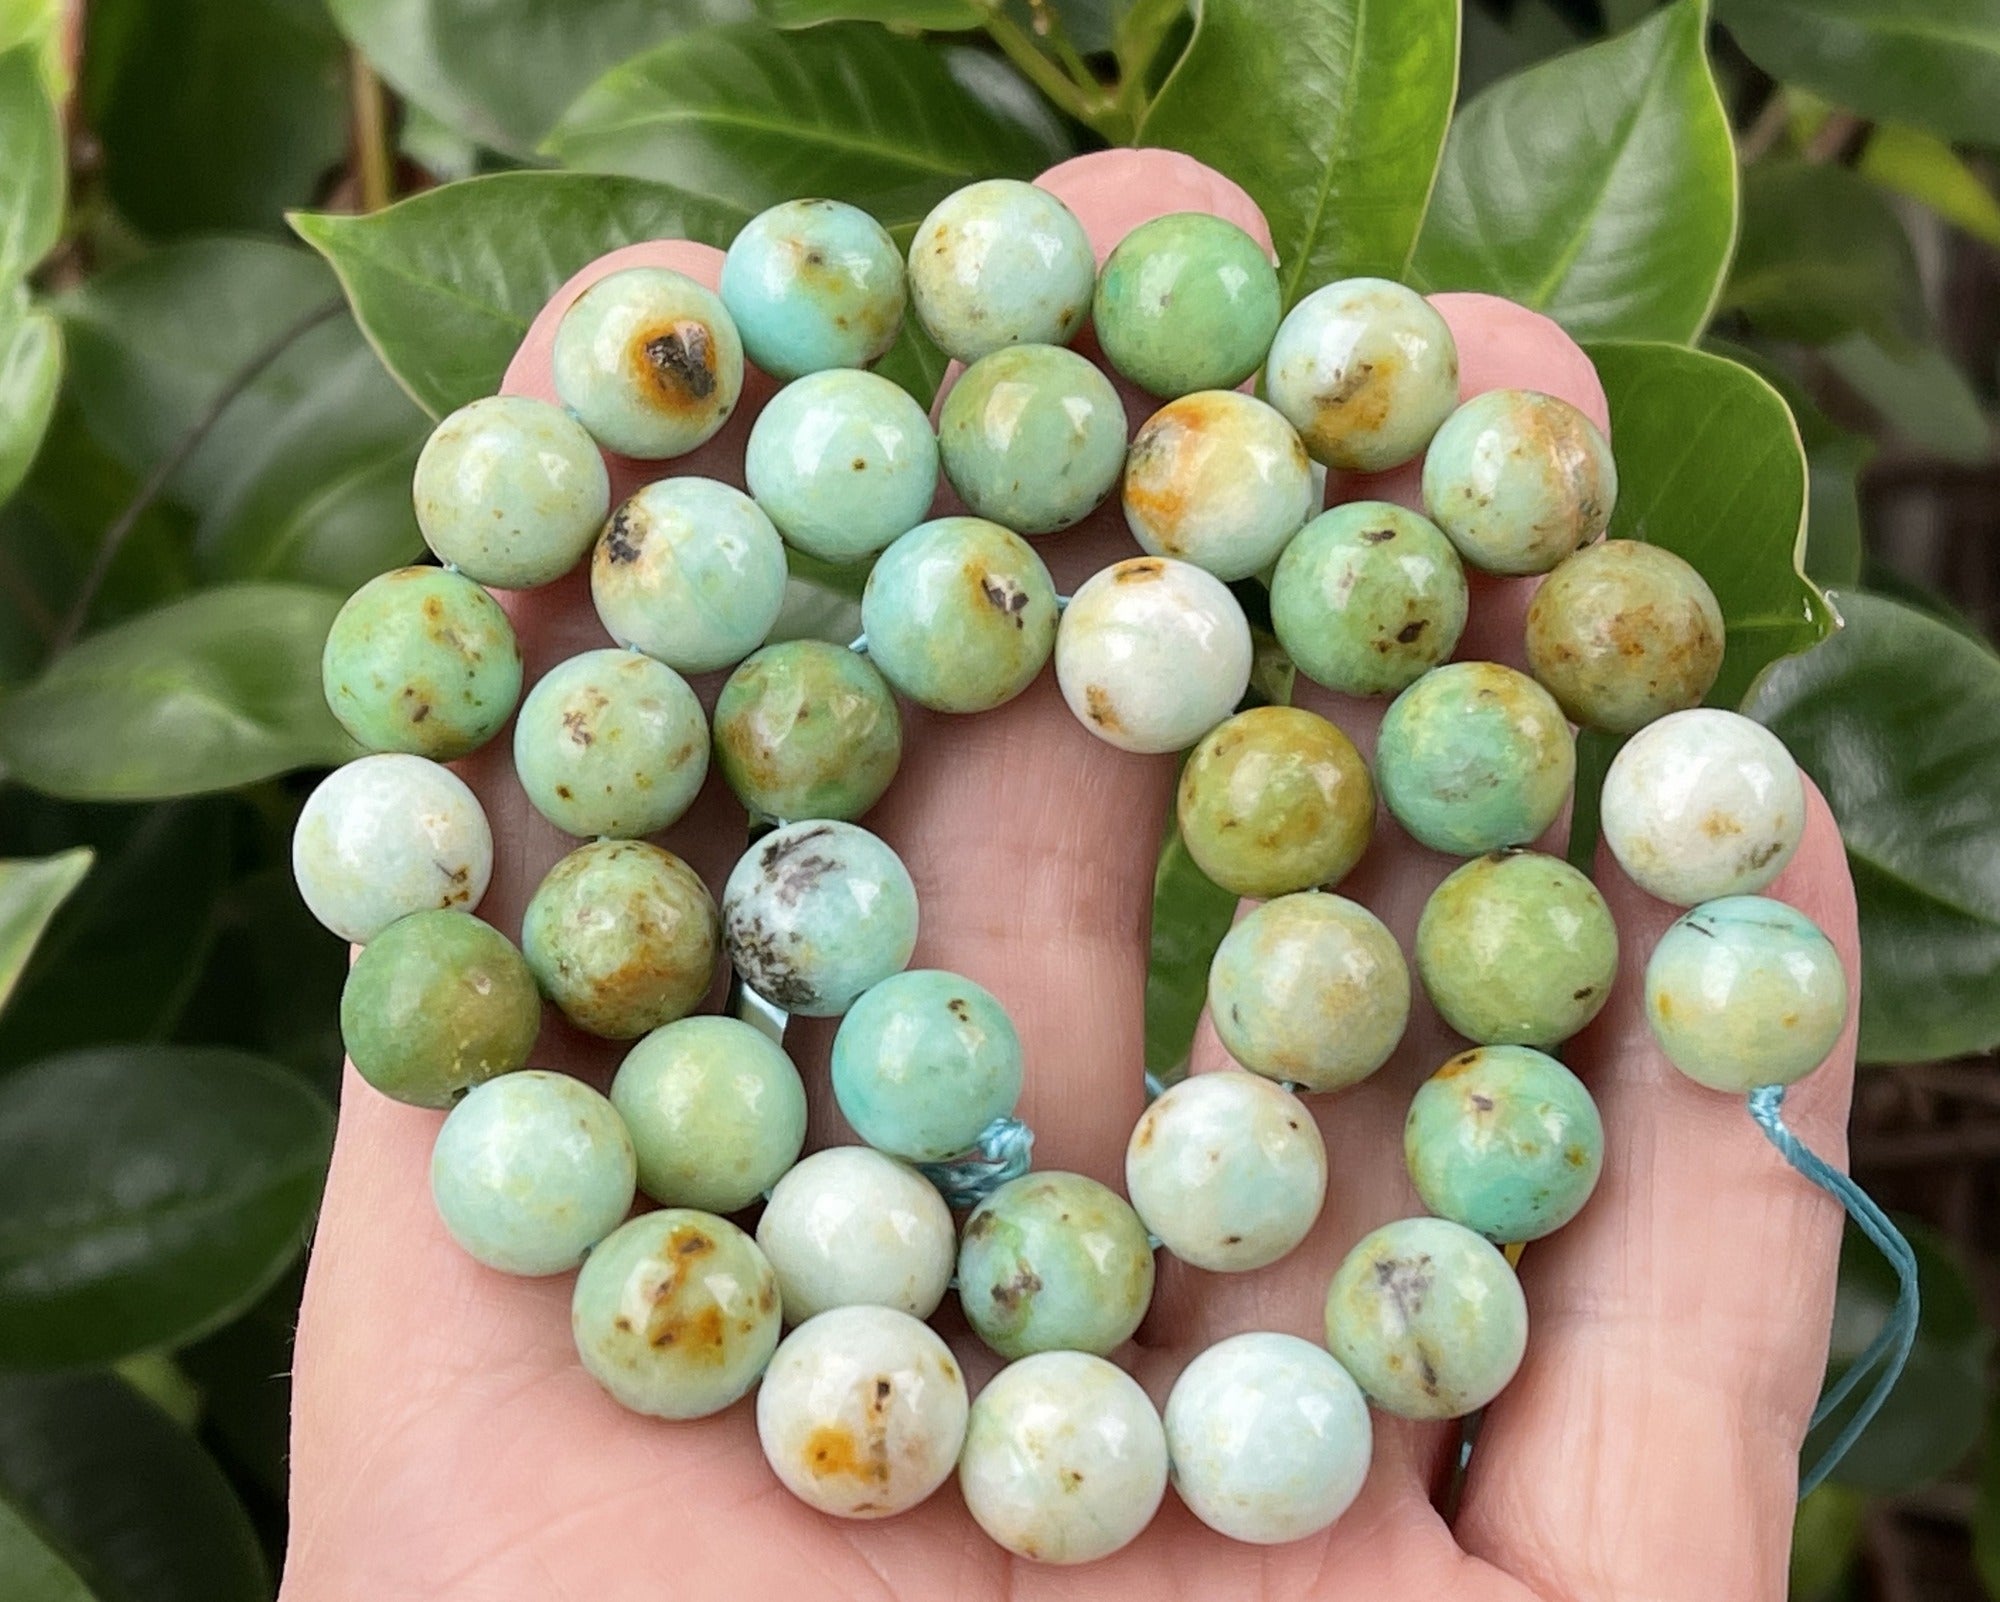 Green Mongolian Turquoise 10mm round natural gemstone beads 15.5" strand